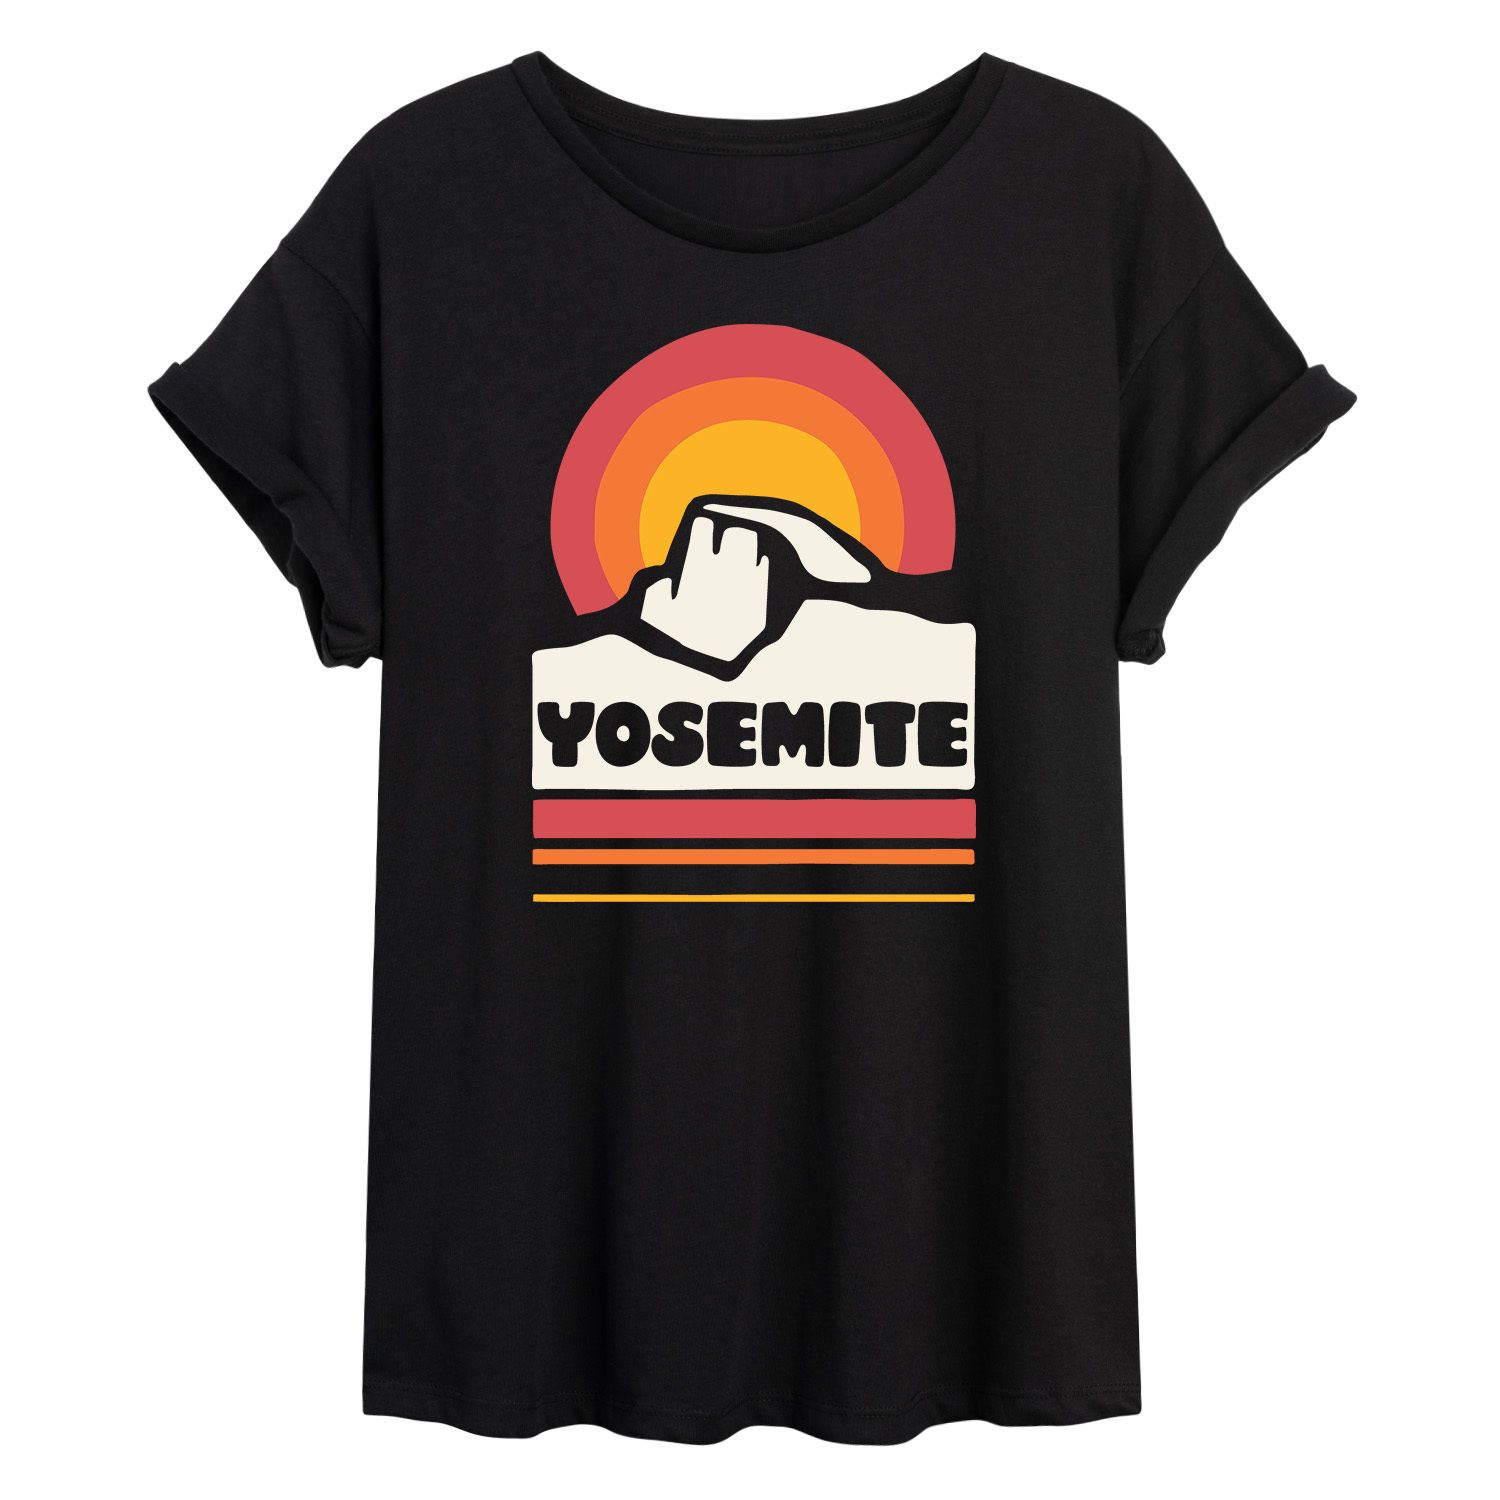 Размерная футболка с рисунком Yosemite Park для юниоров Licensed Character